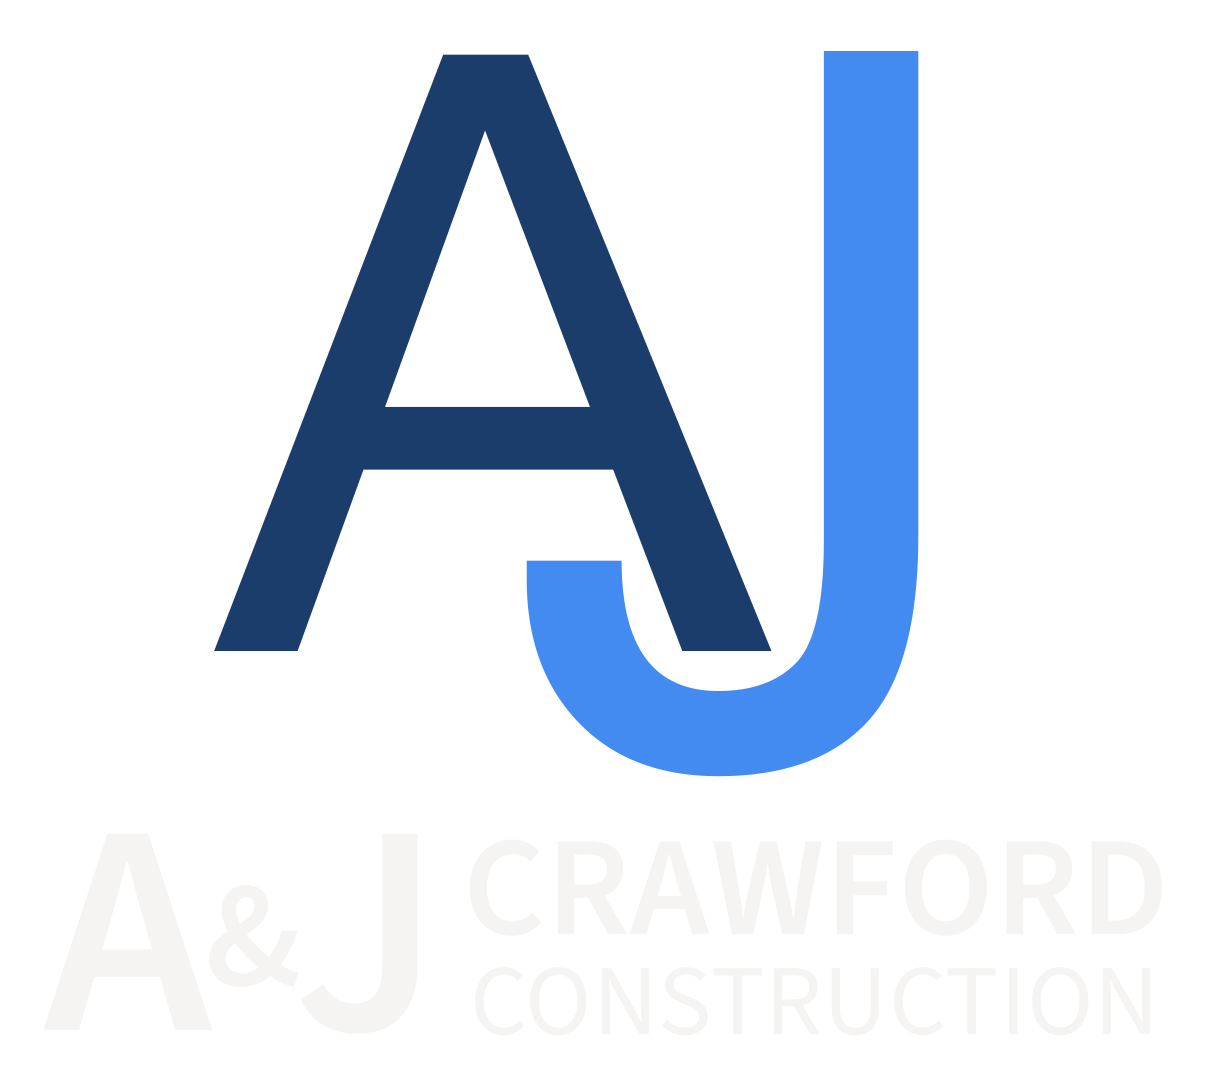 AJ Crawford Construction in Newcastle upon Tyne AJ Logo White Text